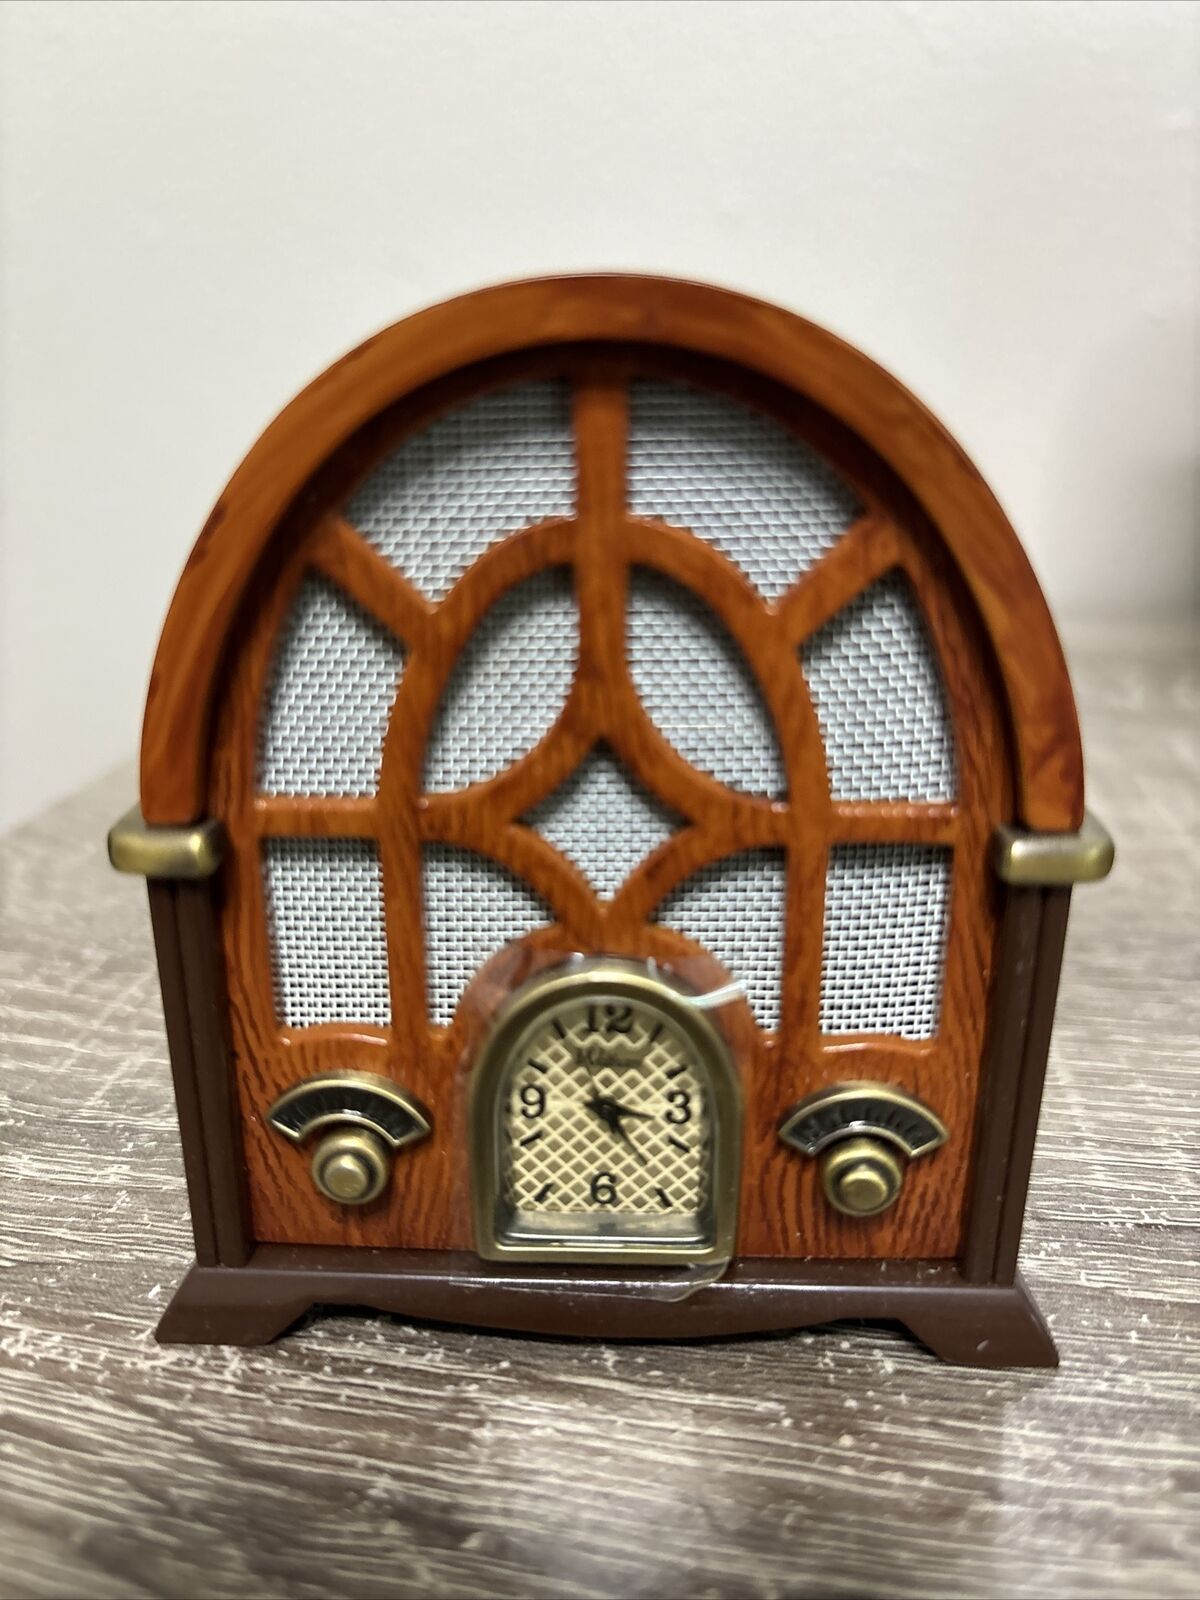 Waltham vintage radio Mini Clock  - Excellent condition  - Needs Battery